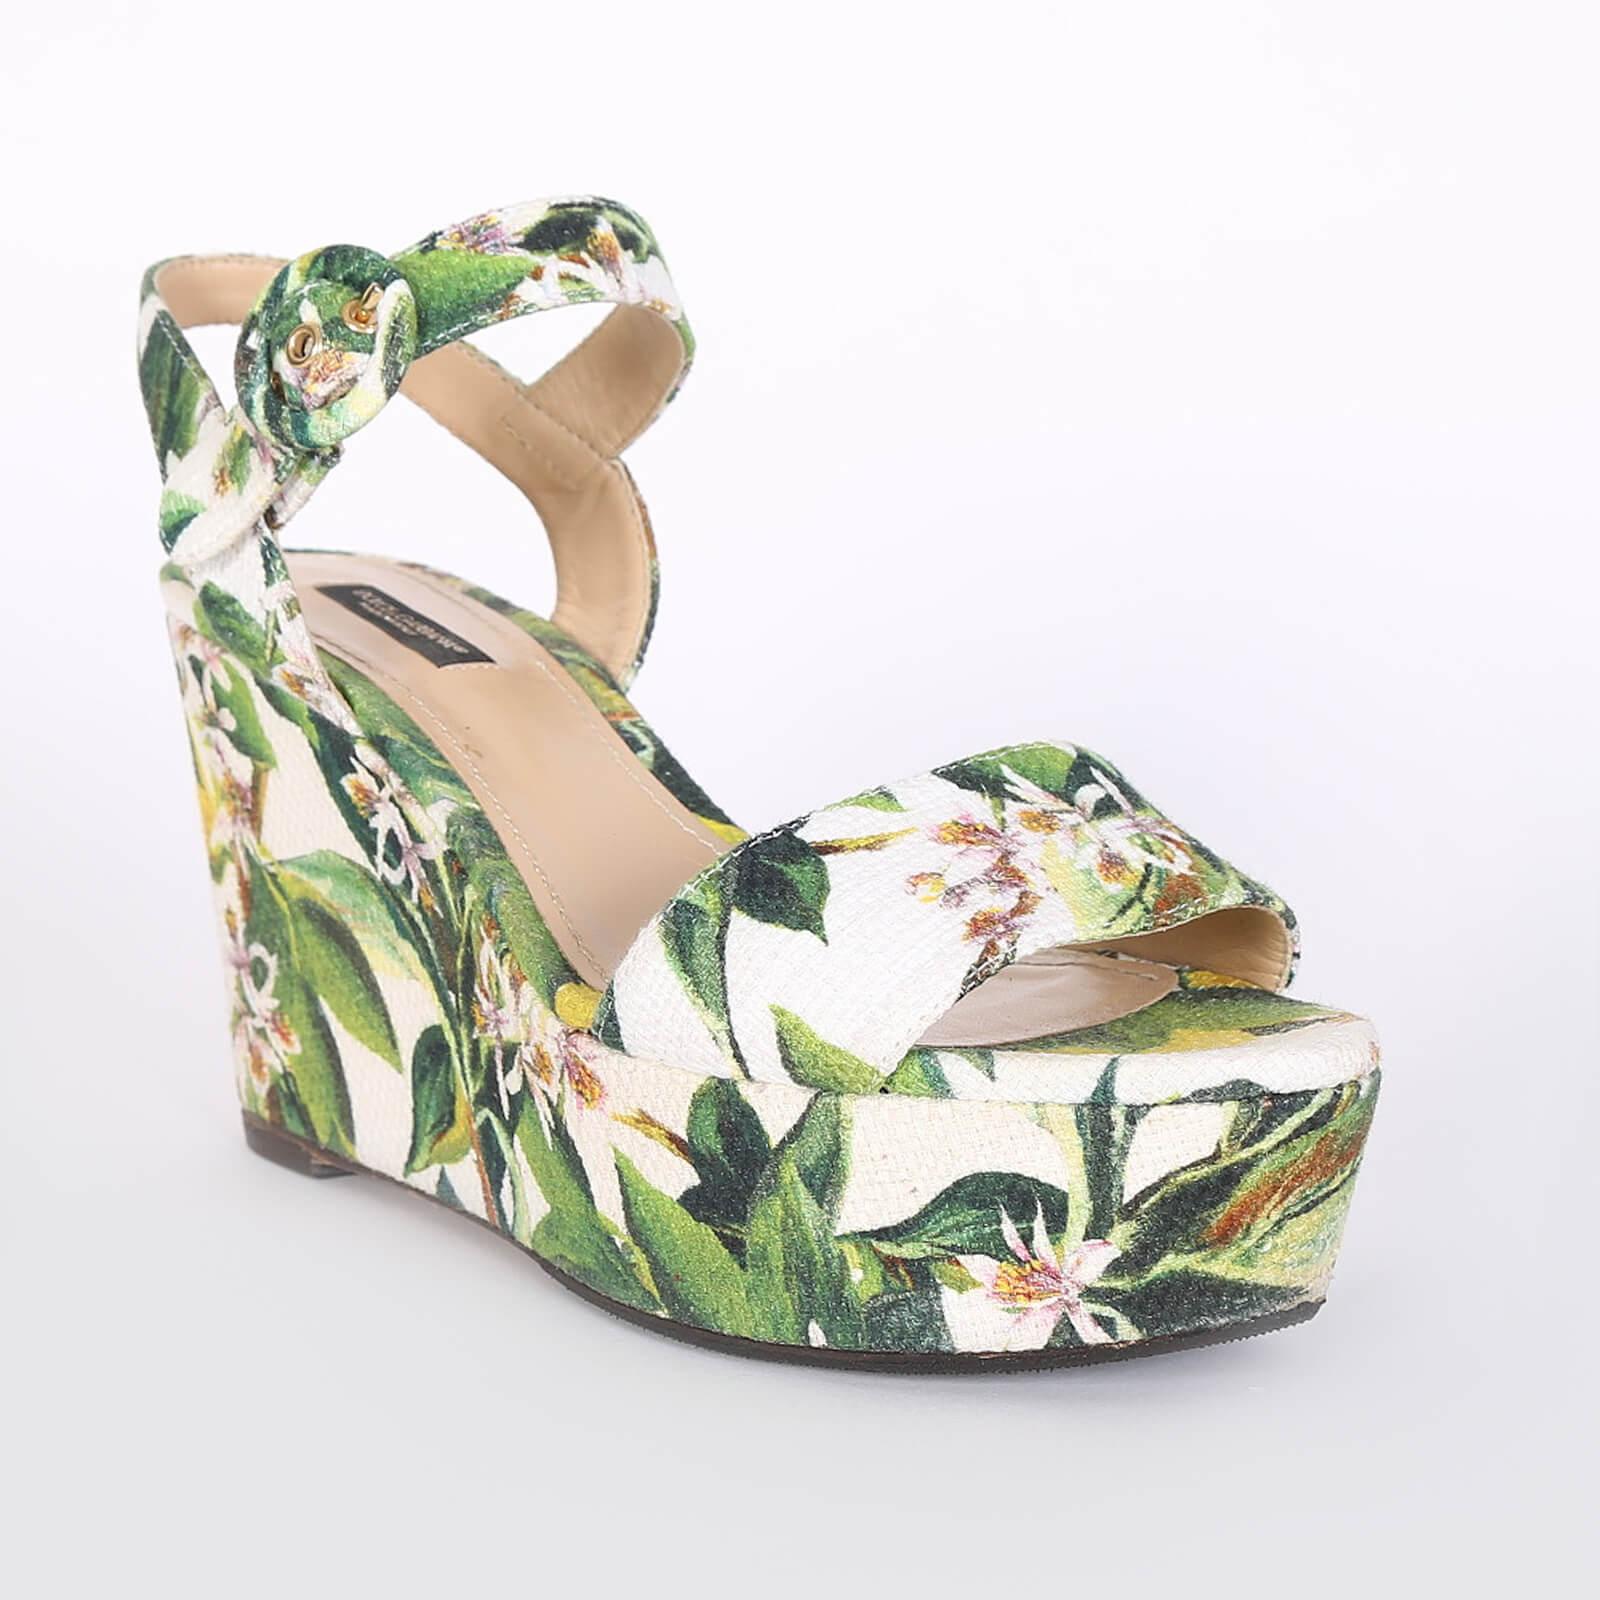 Dolce & Gabbana - Floral Print Canvas Wedge Sandals Green 39